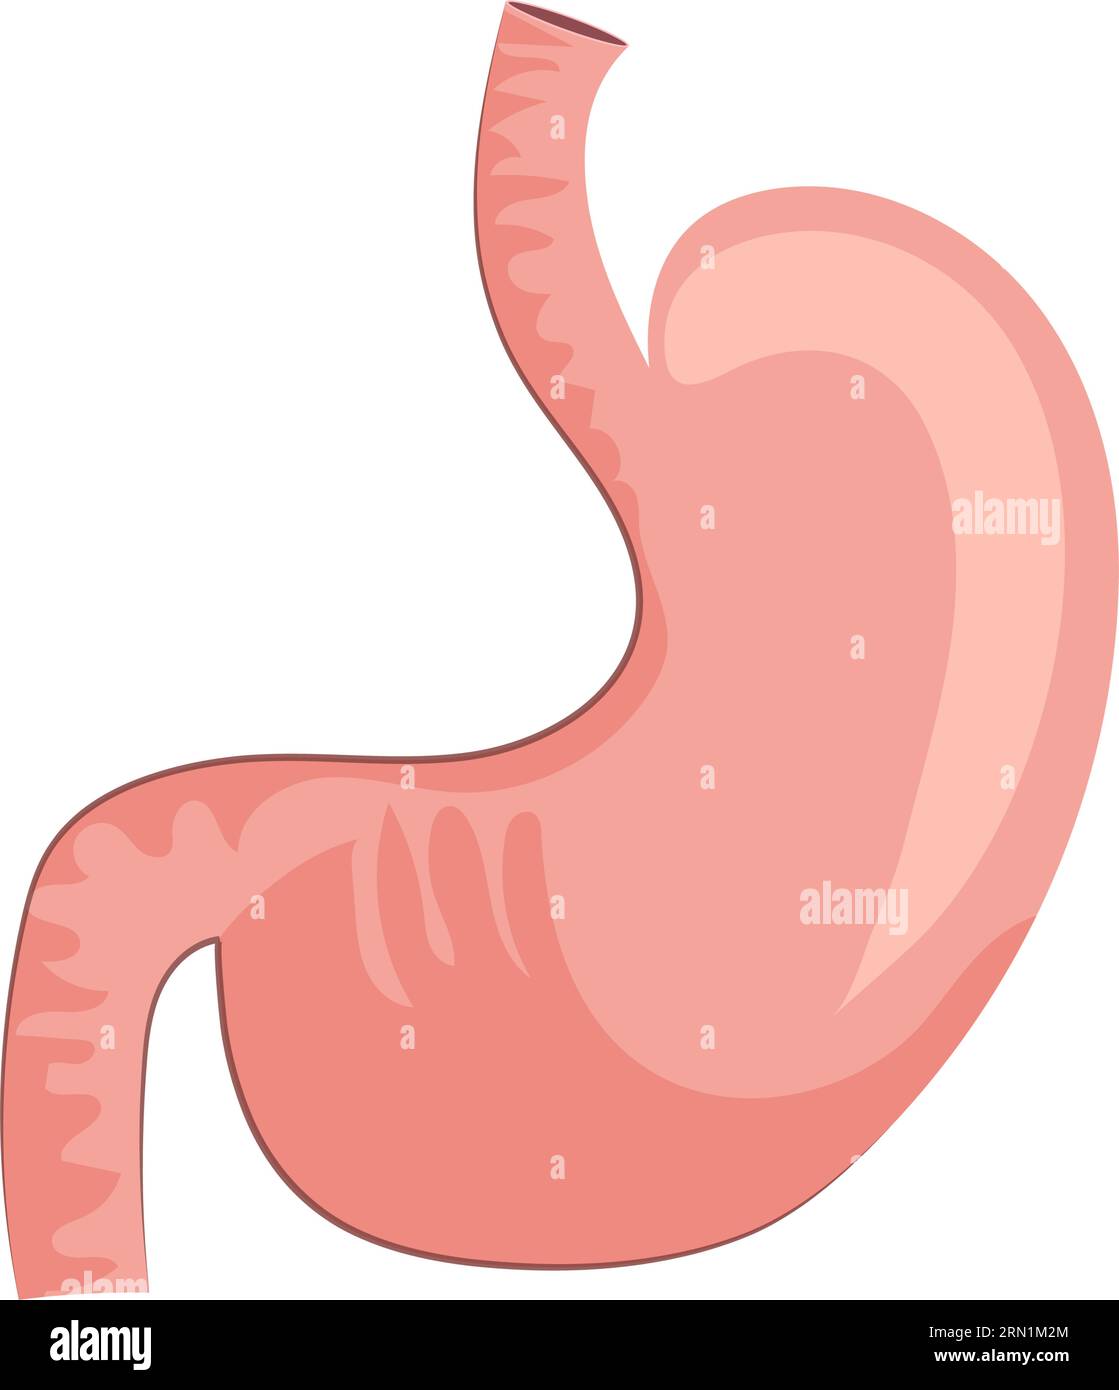 Human stomach illustration Stock Vector